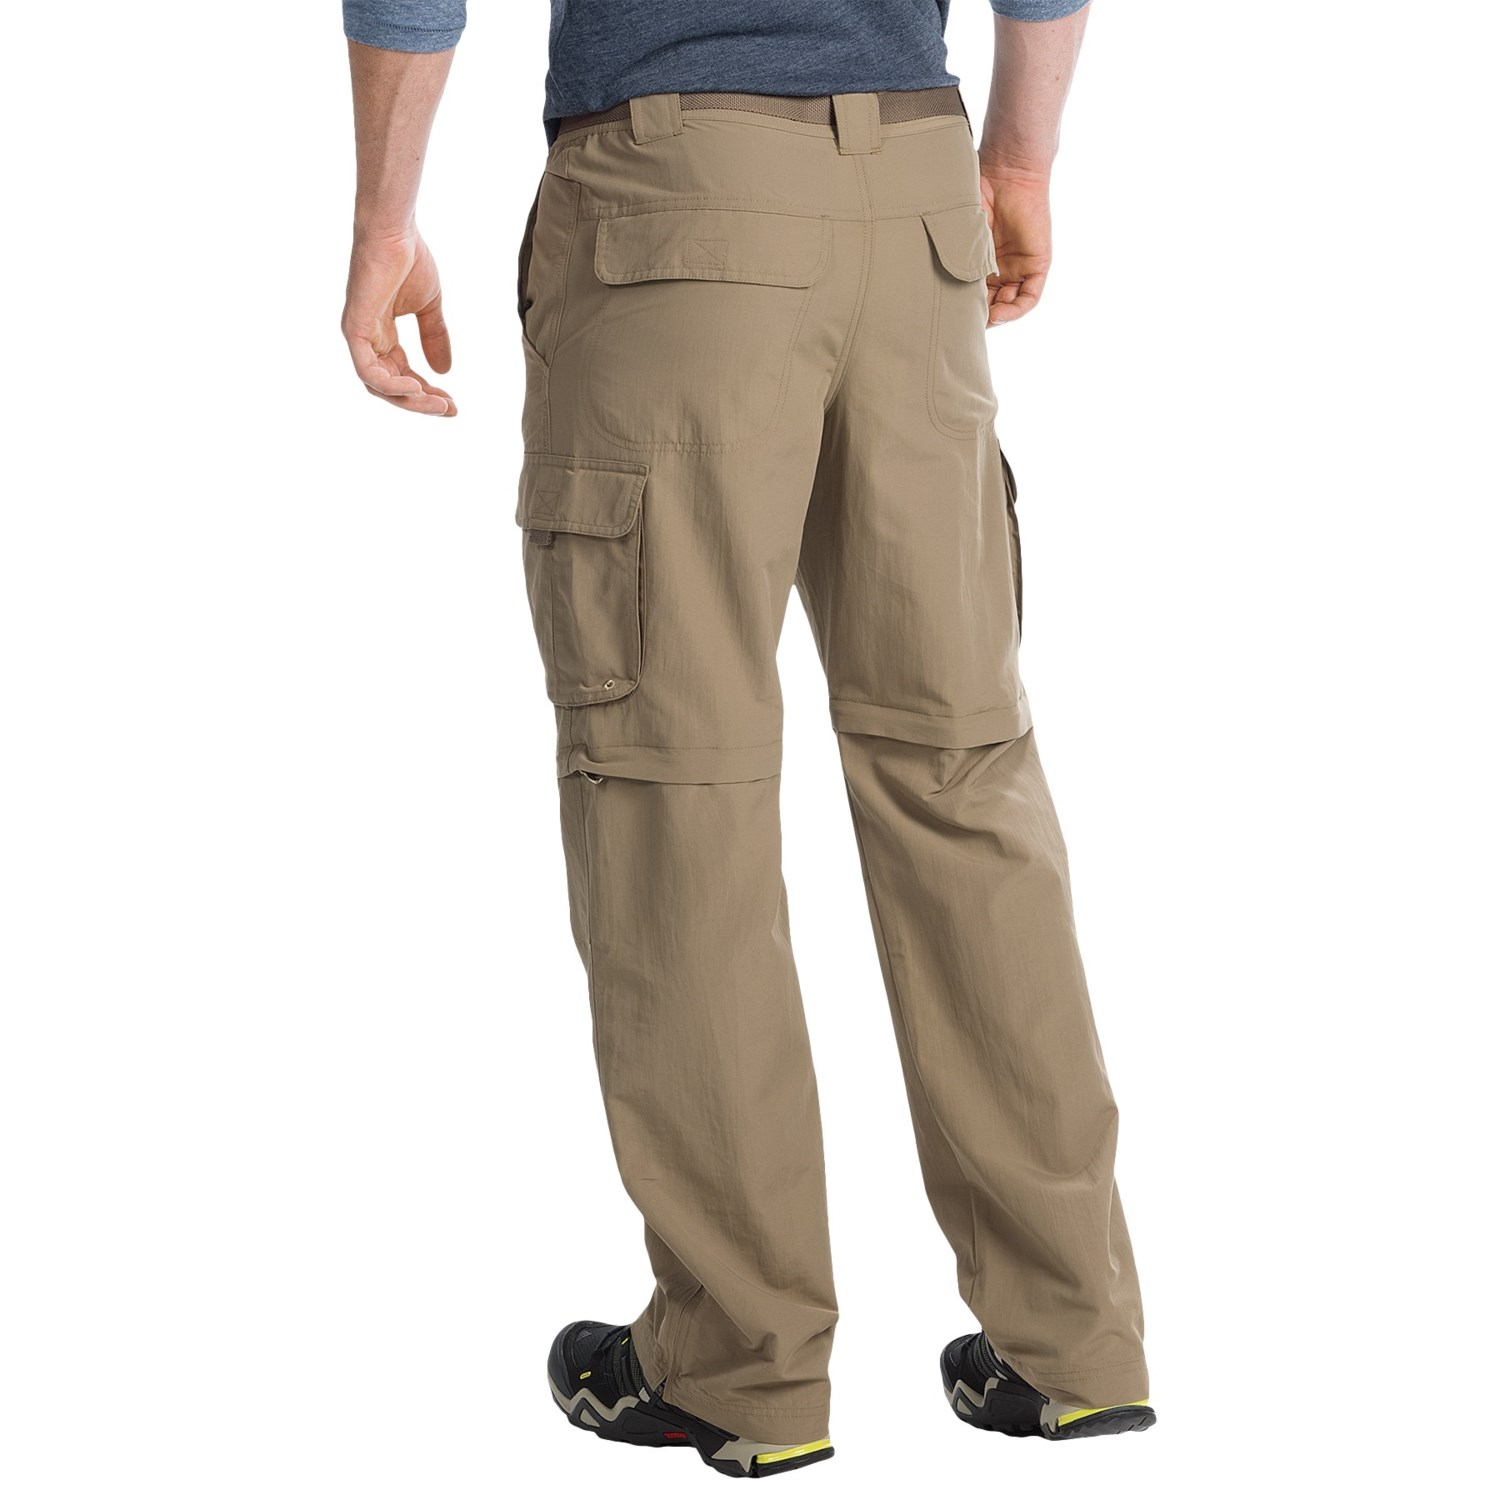 Pacific Trail Nylon Faille Convertible Pants (For Men) - Save 76%